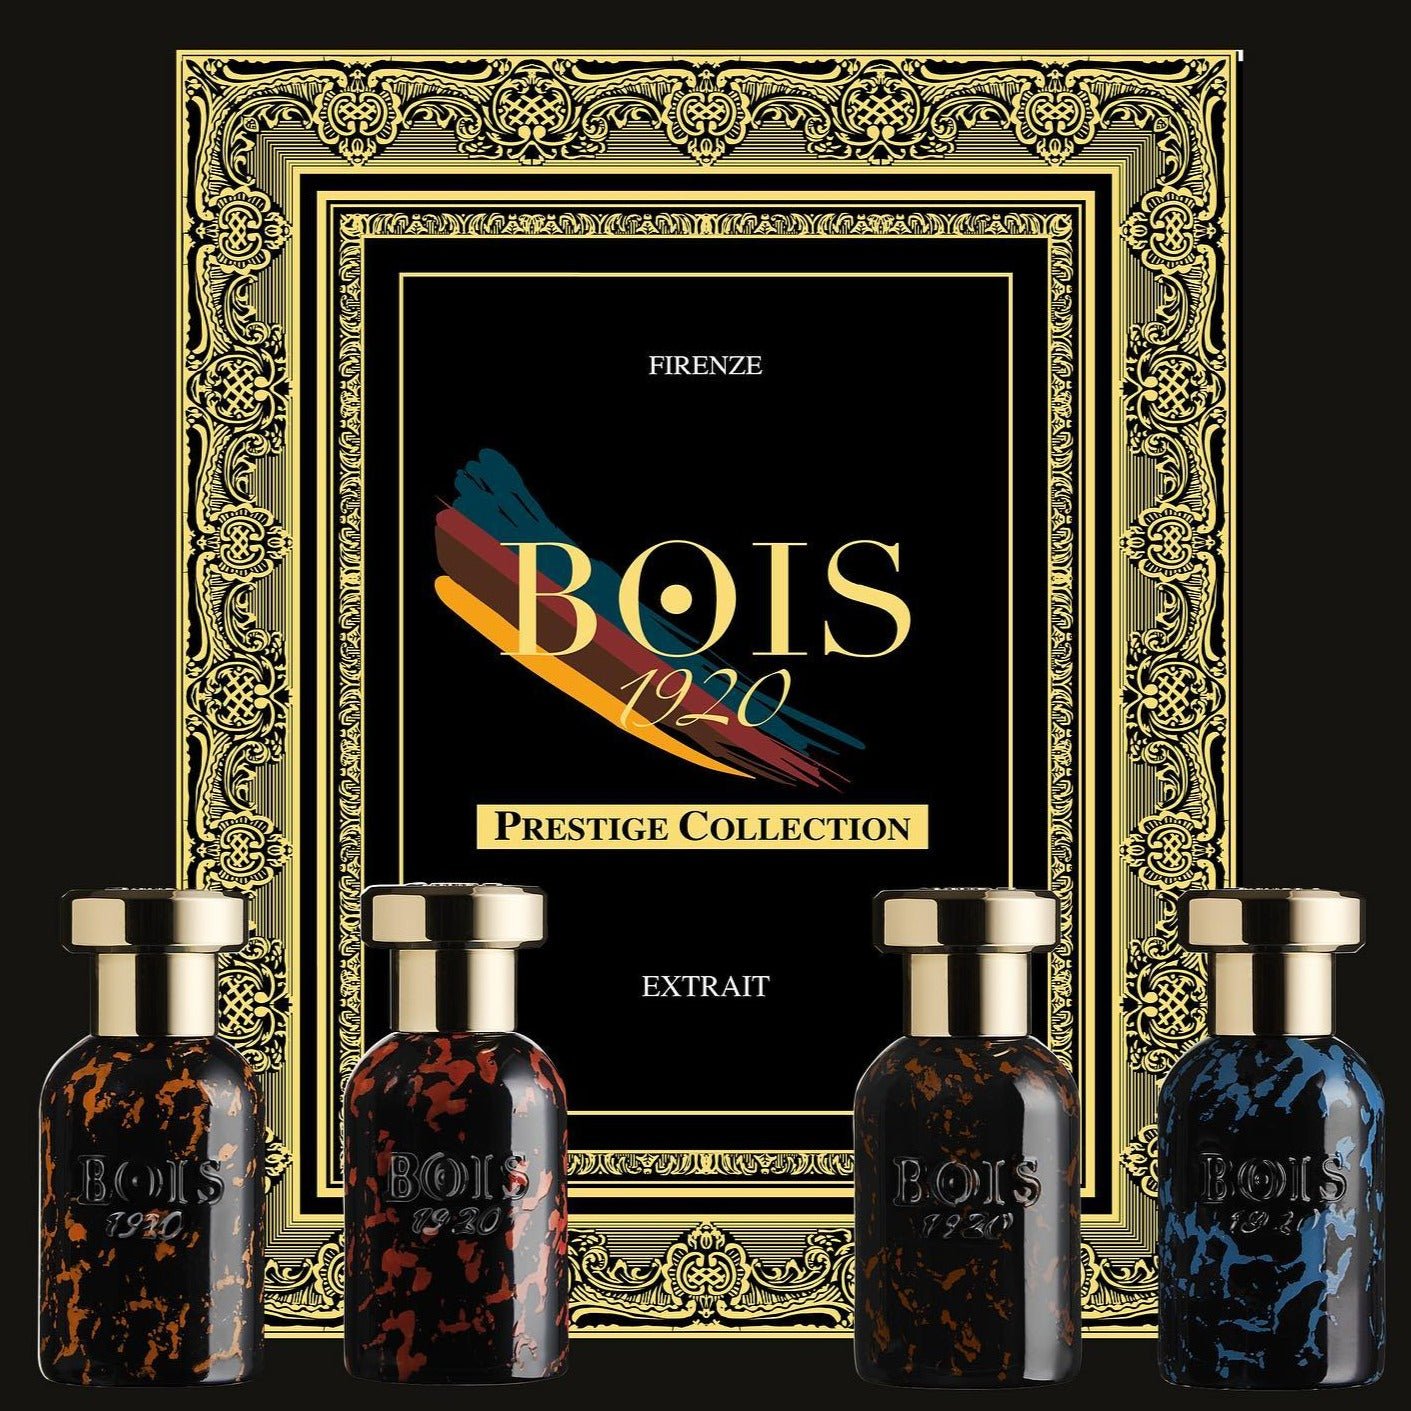 Bois 1920 Sacro E Profano Extrait De Parfum | My Perfume Shop Australia